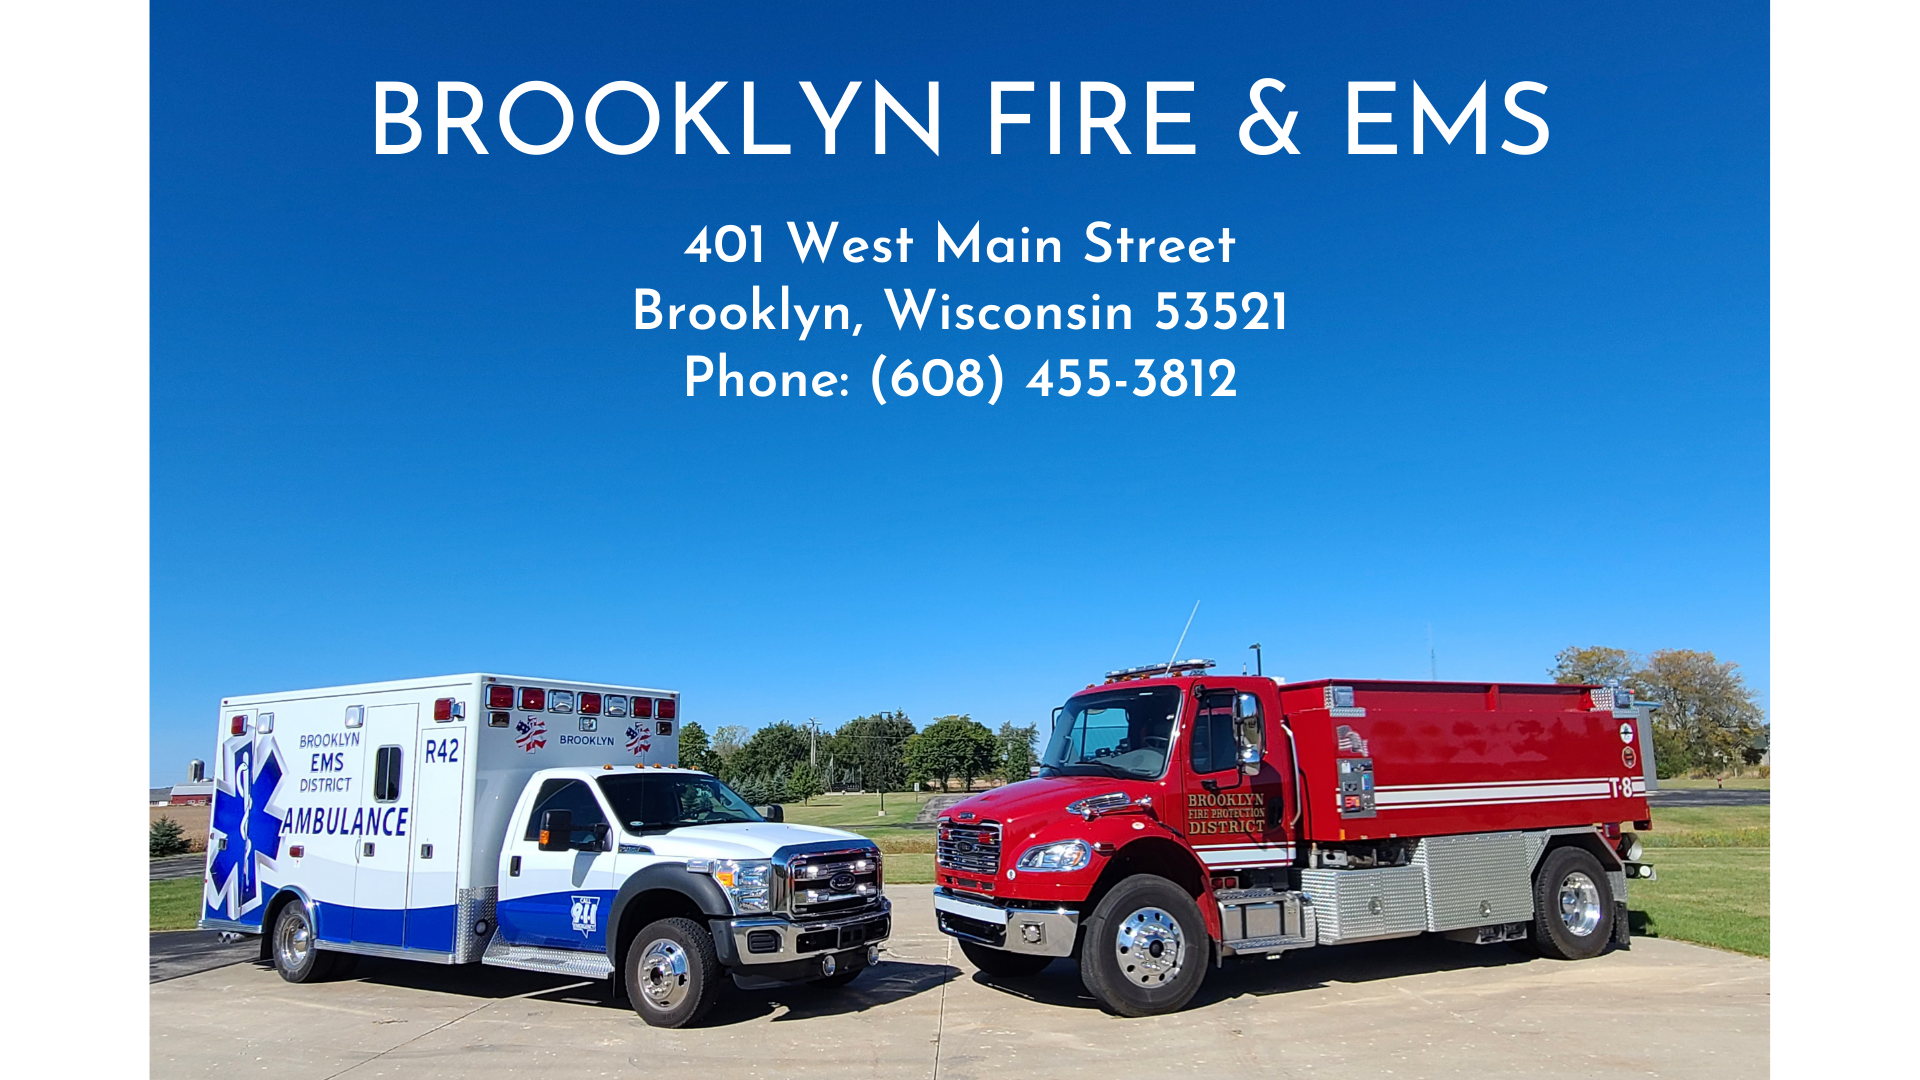 BROOKLYN FIRE & EMS 401 West Main Street Brooklyn, Wisconsin 53521 Phone (608) 455-3812